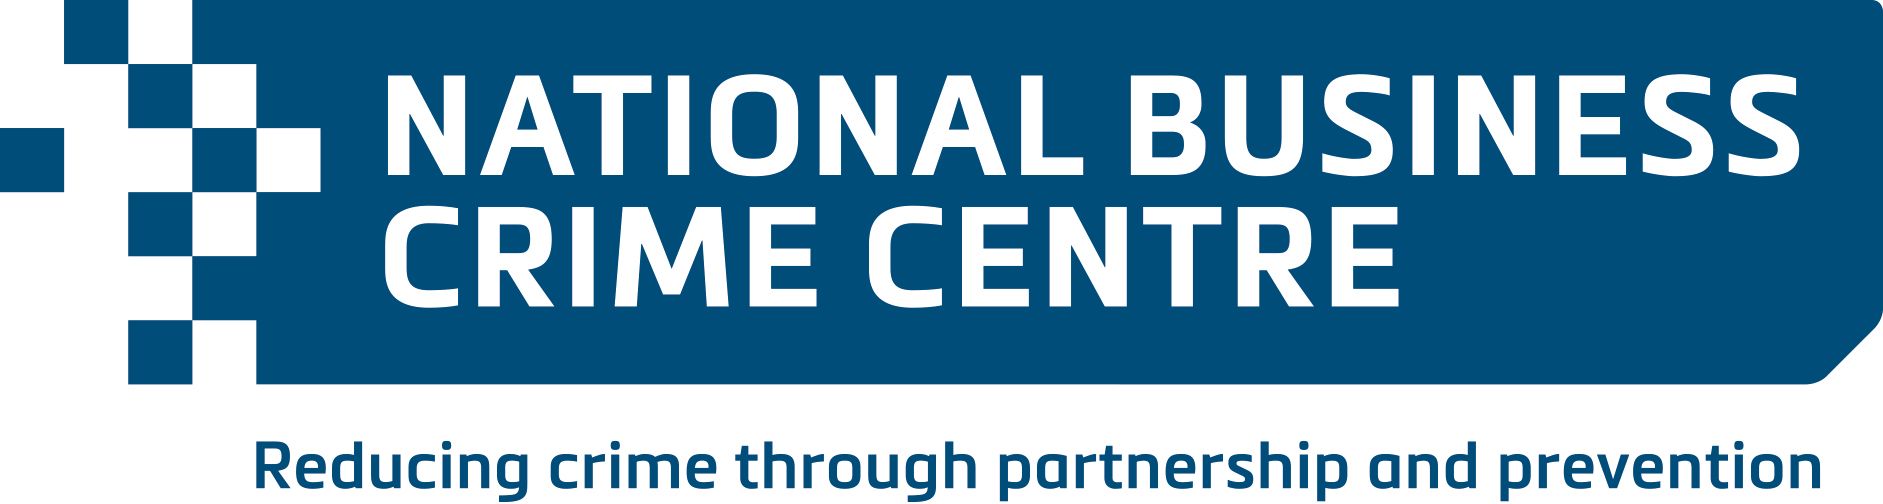 National-Business-Crime-Centre-logo.jpg